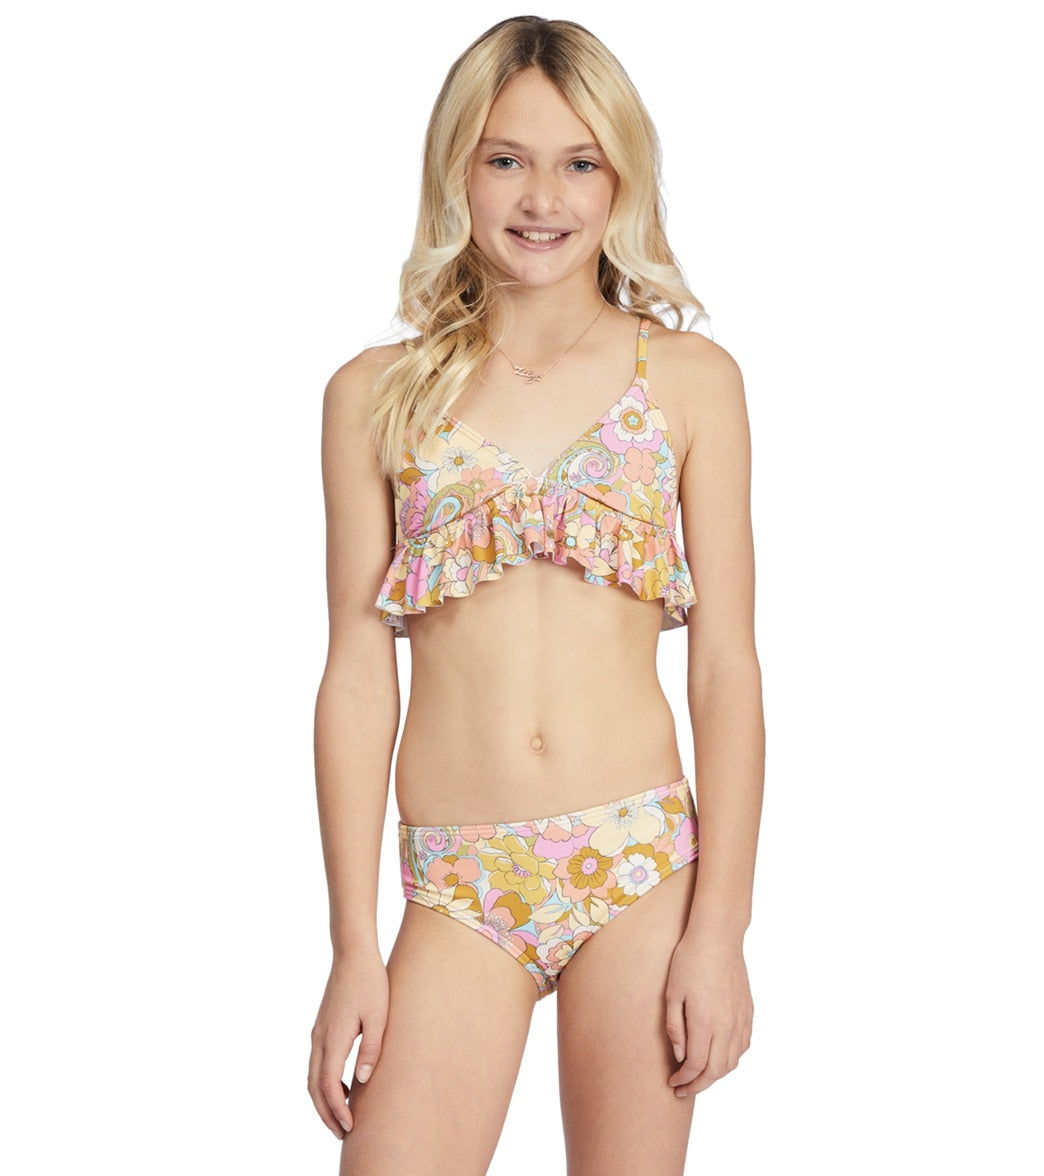 Swimsuit Size 14 16 Girls Summer Big Kids Girls Bathing Suits 2 Piece  Swimsuit Kids Purple Floral Girl Bikini Size